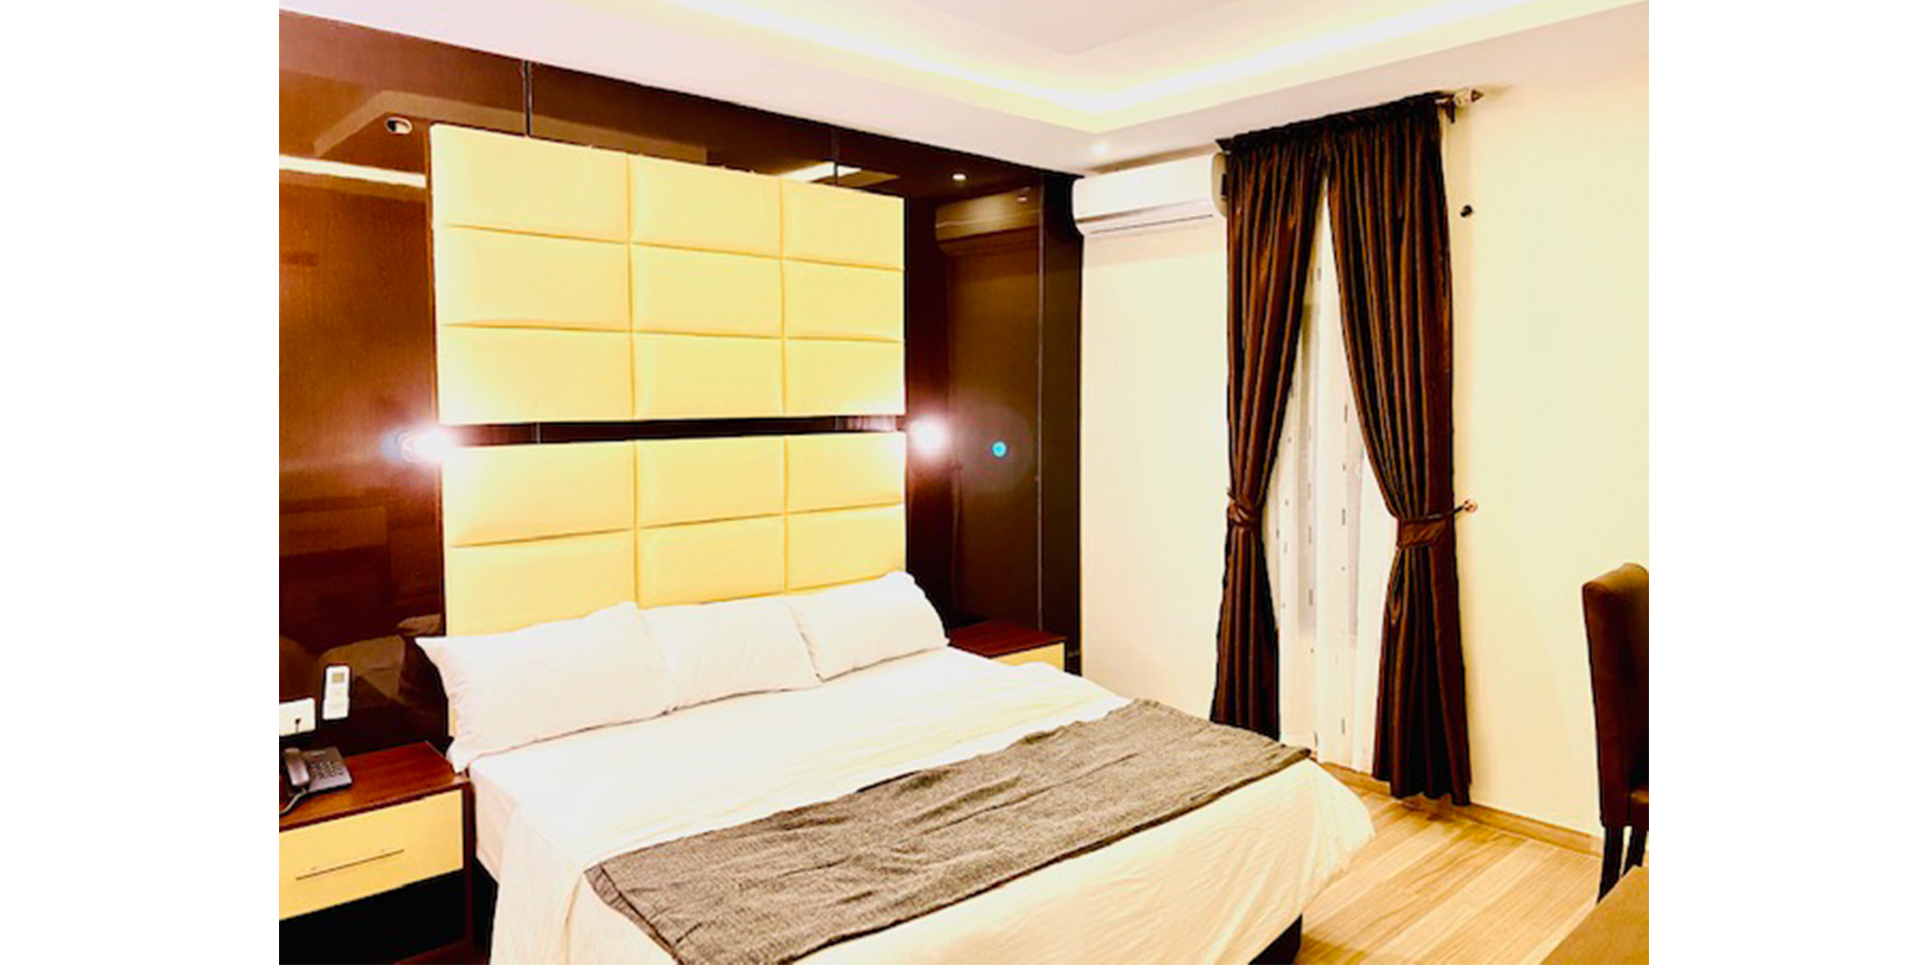 Mayfair-Hotels-Room-Image